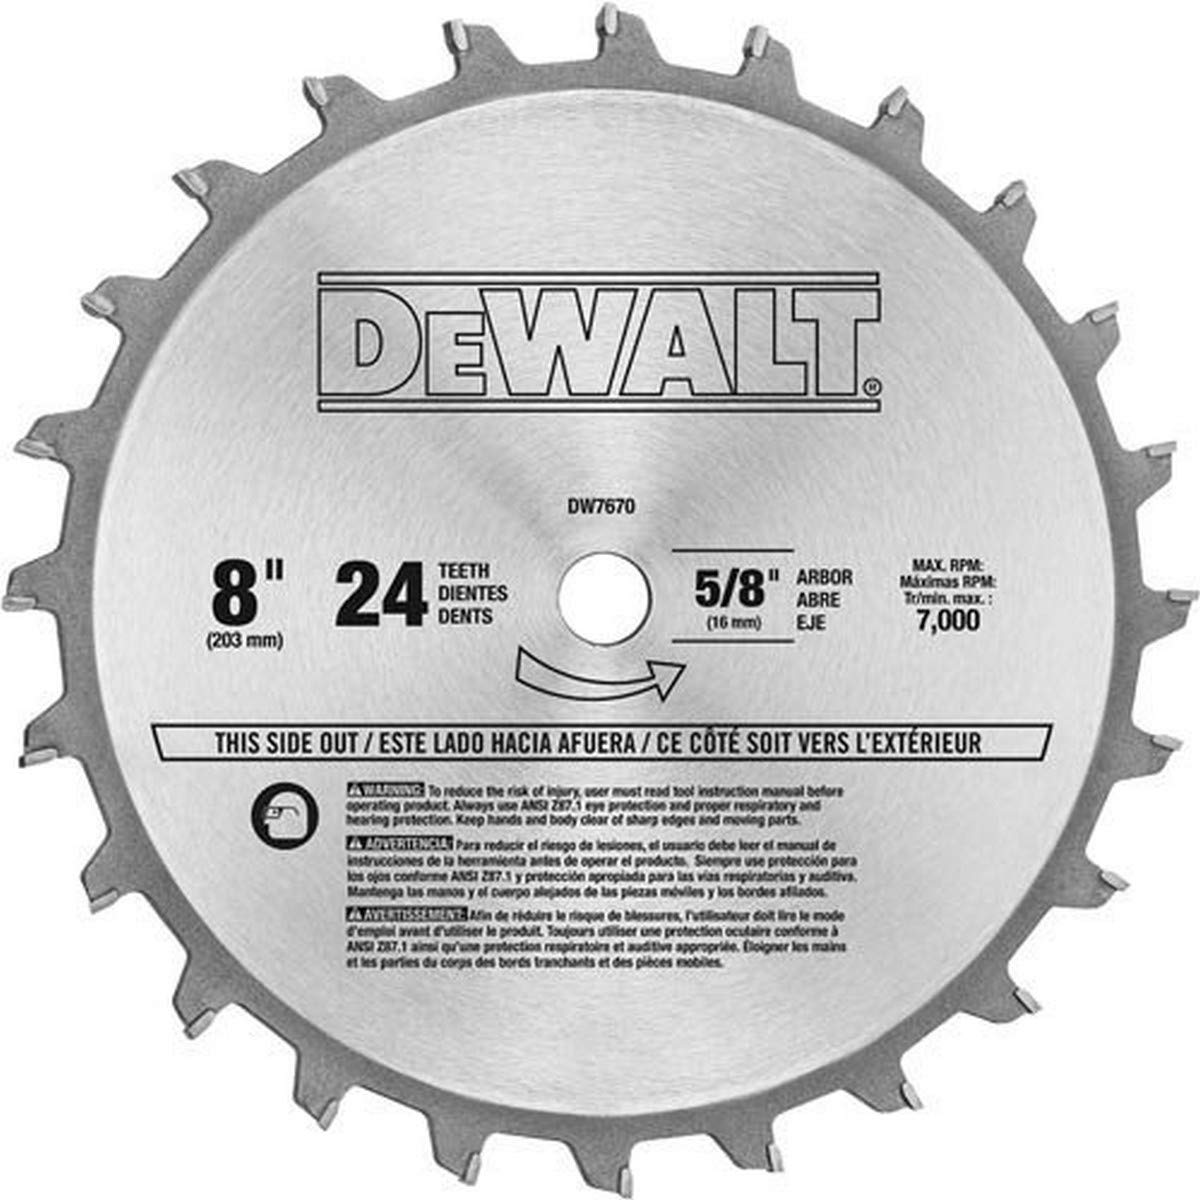 DEWALT Dado ブレードセット、8 インチ、24 歯 (DW7670)...